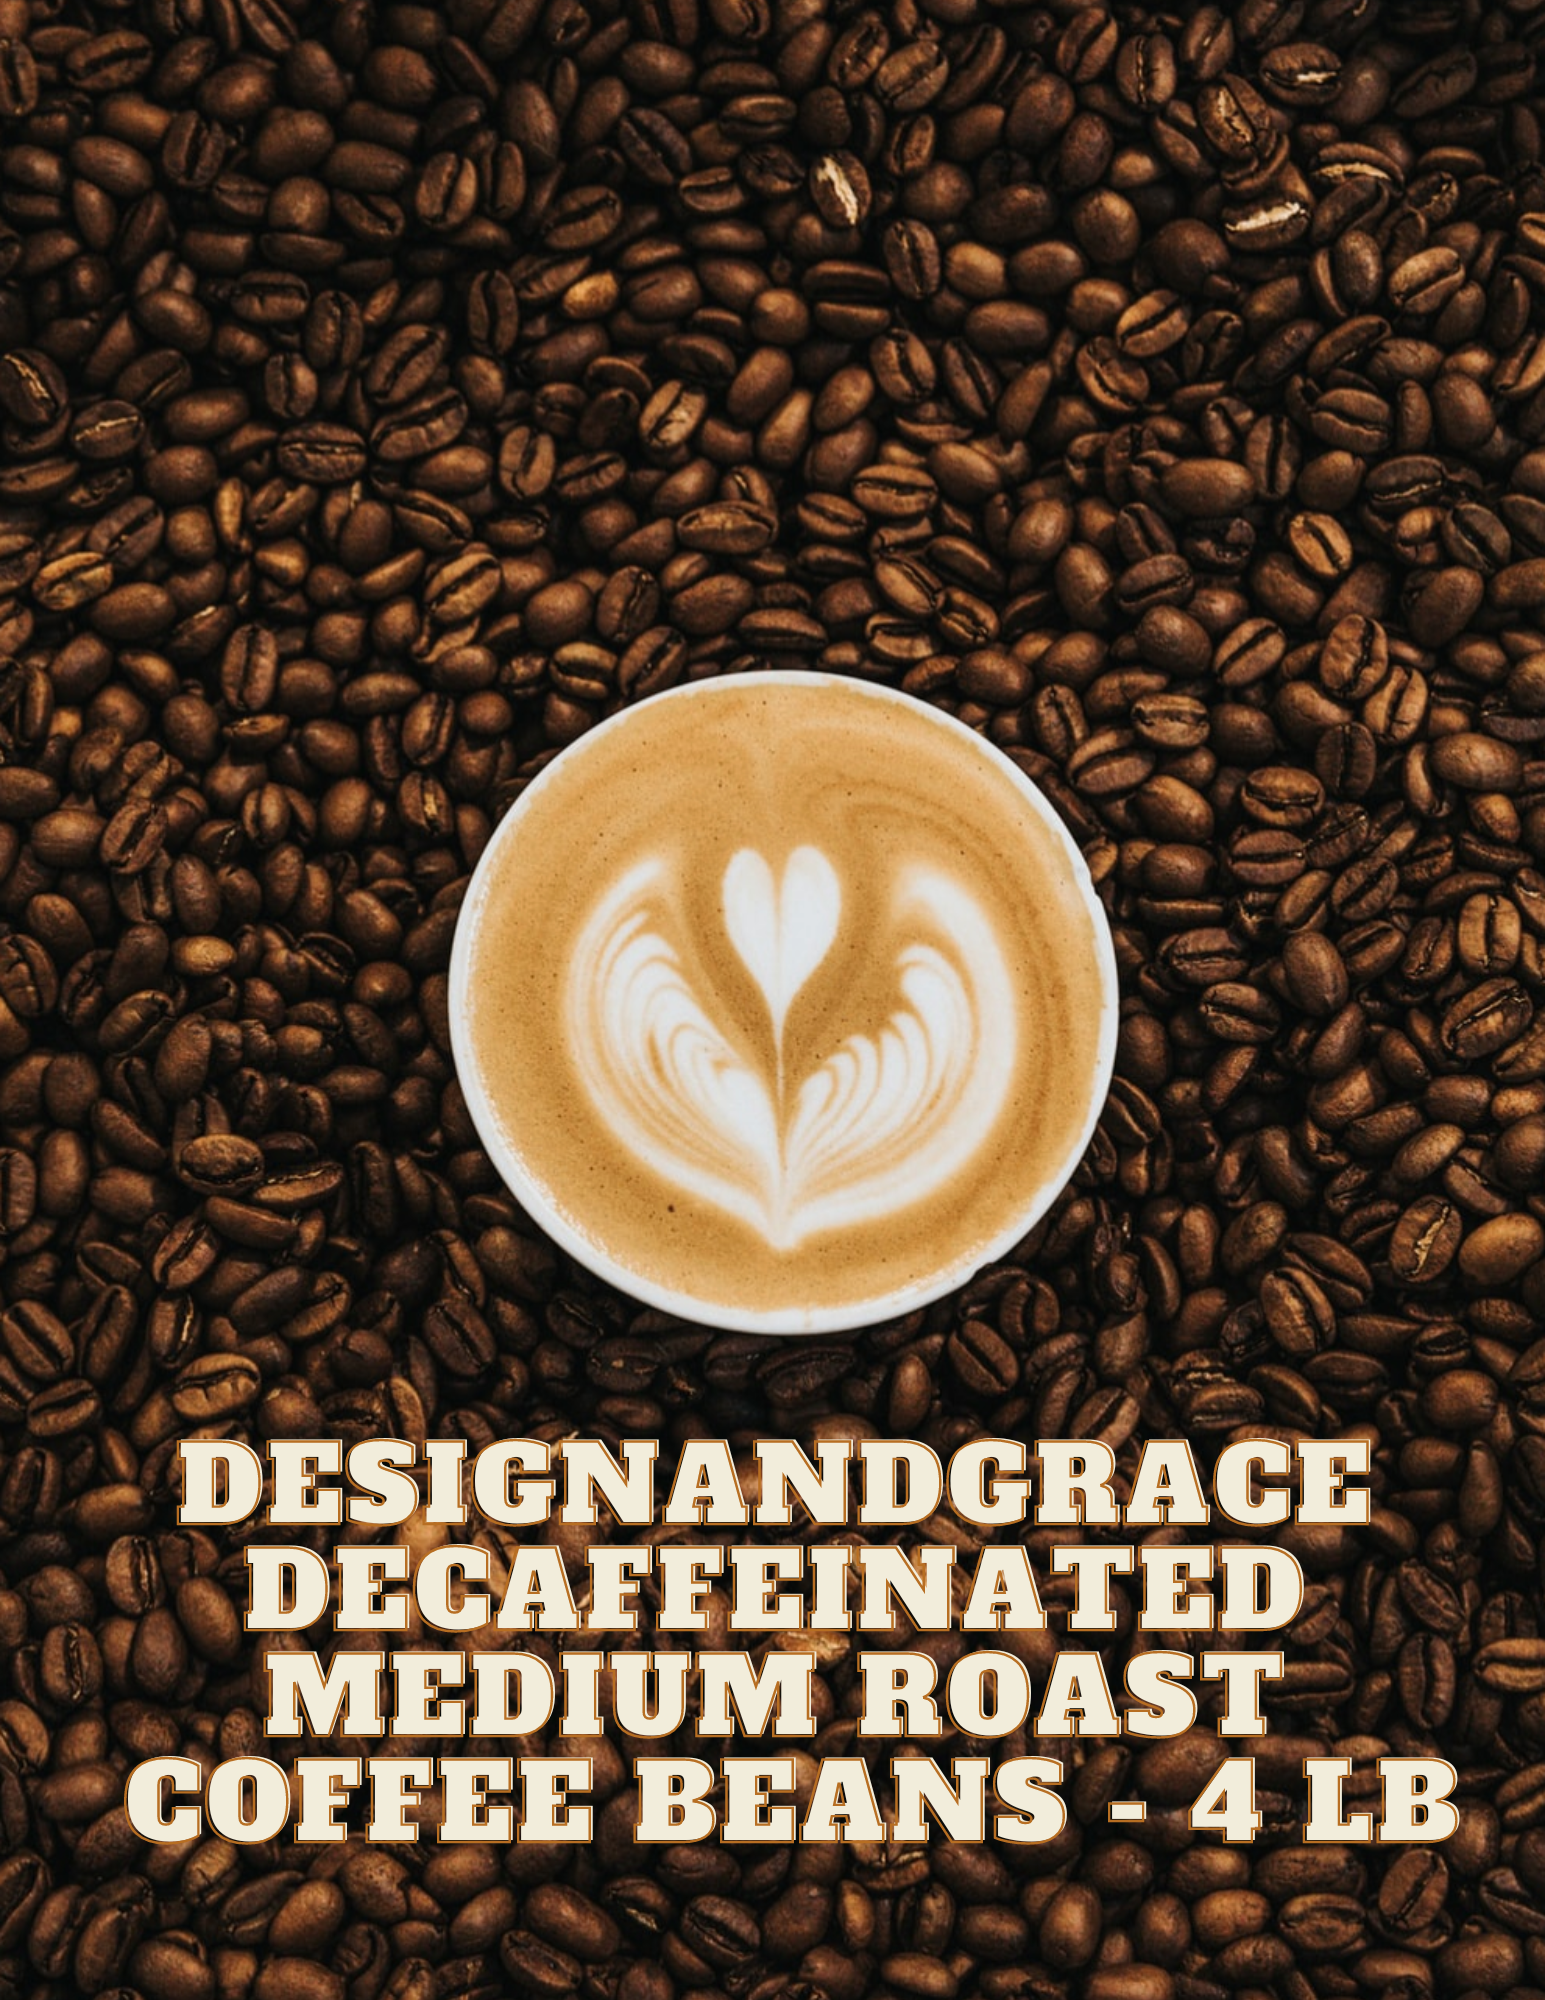 DesignandGrace Decaffeinated Medium Roast Coffee Beans - 4 lb